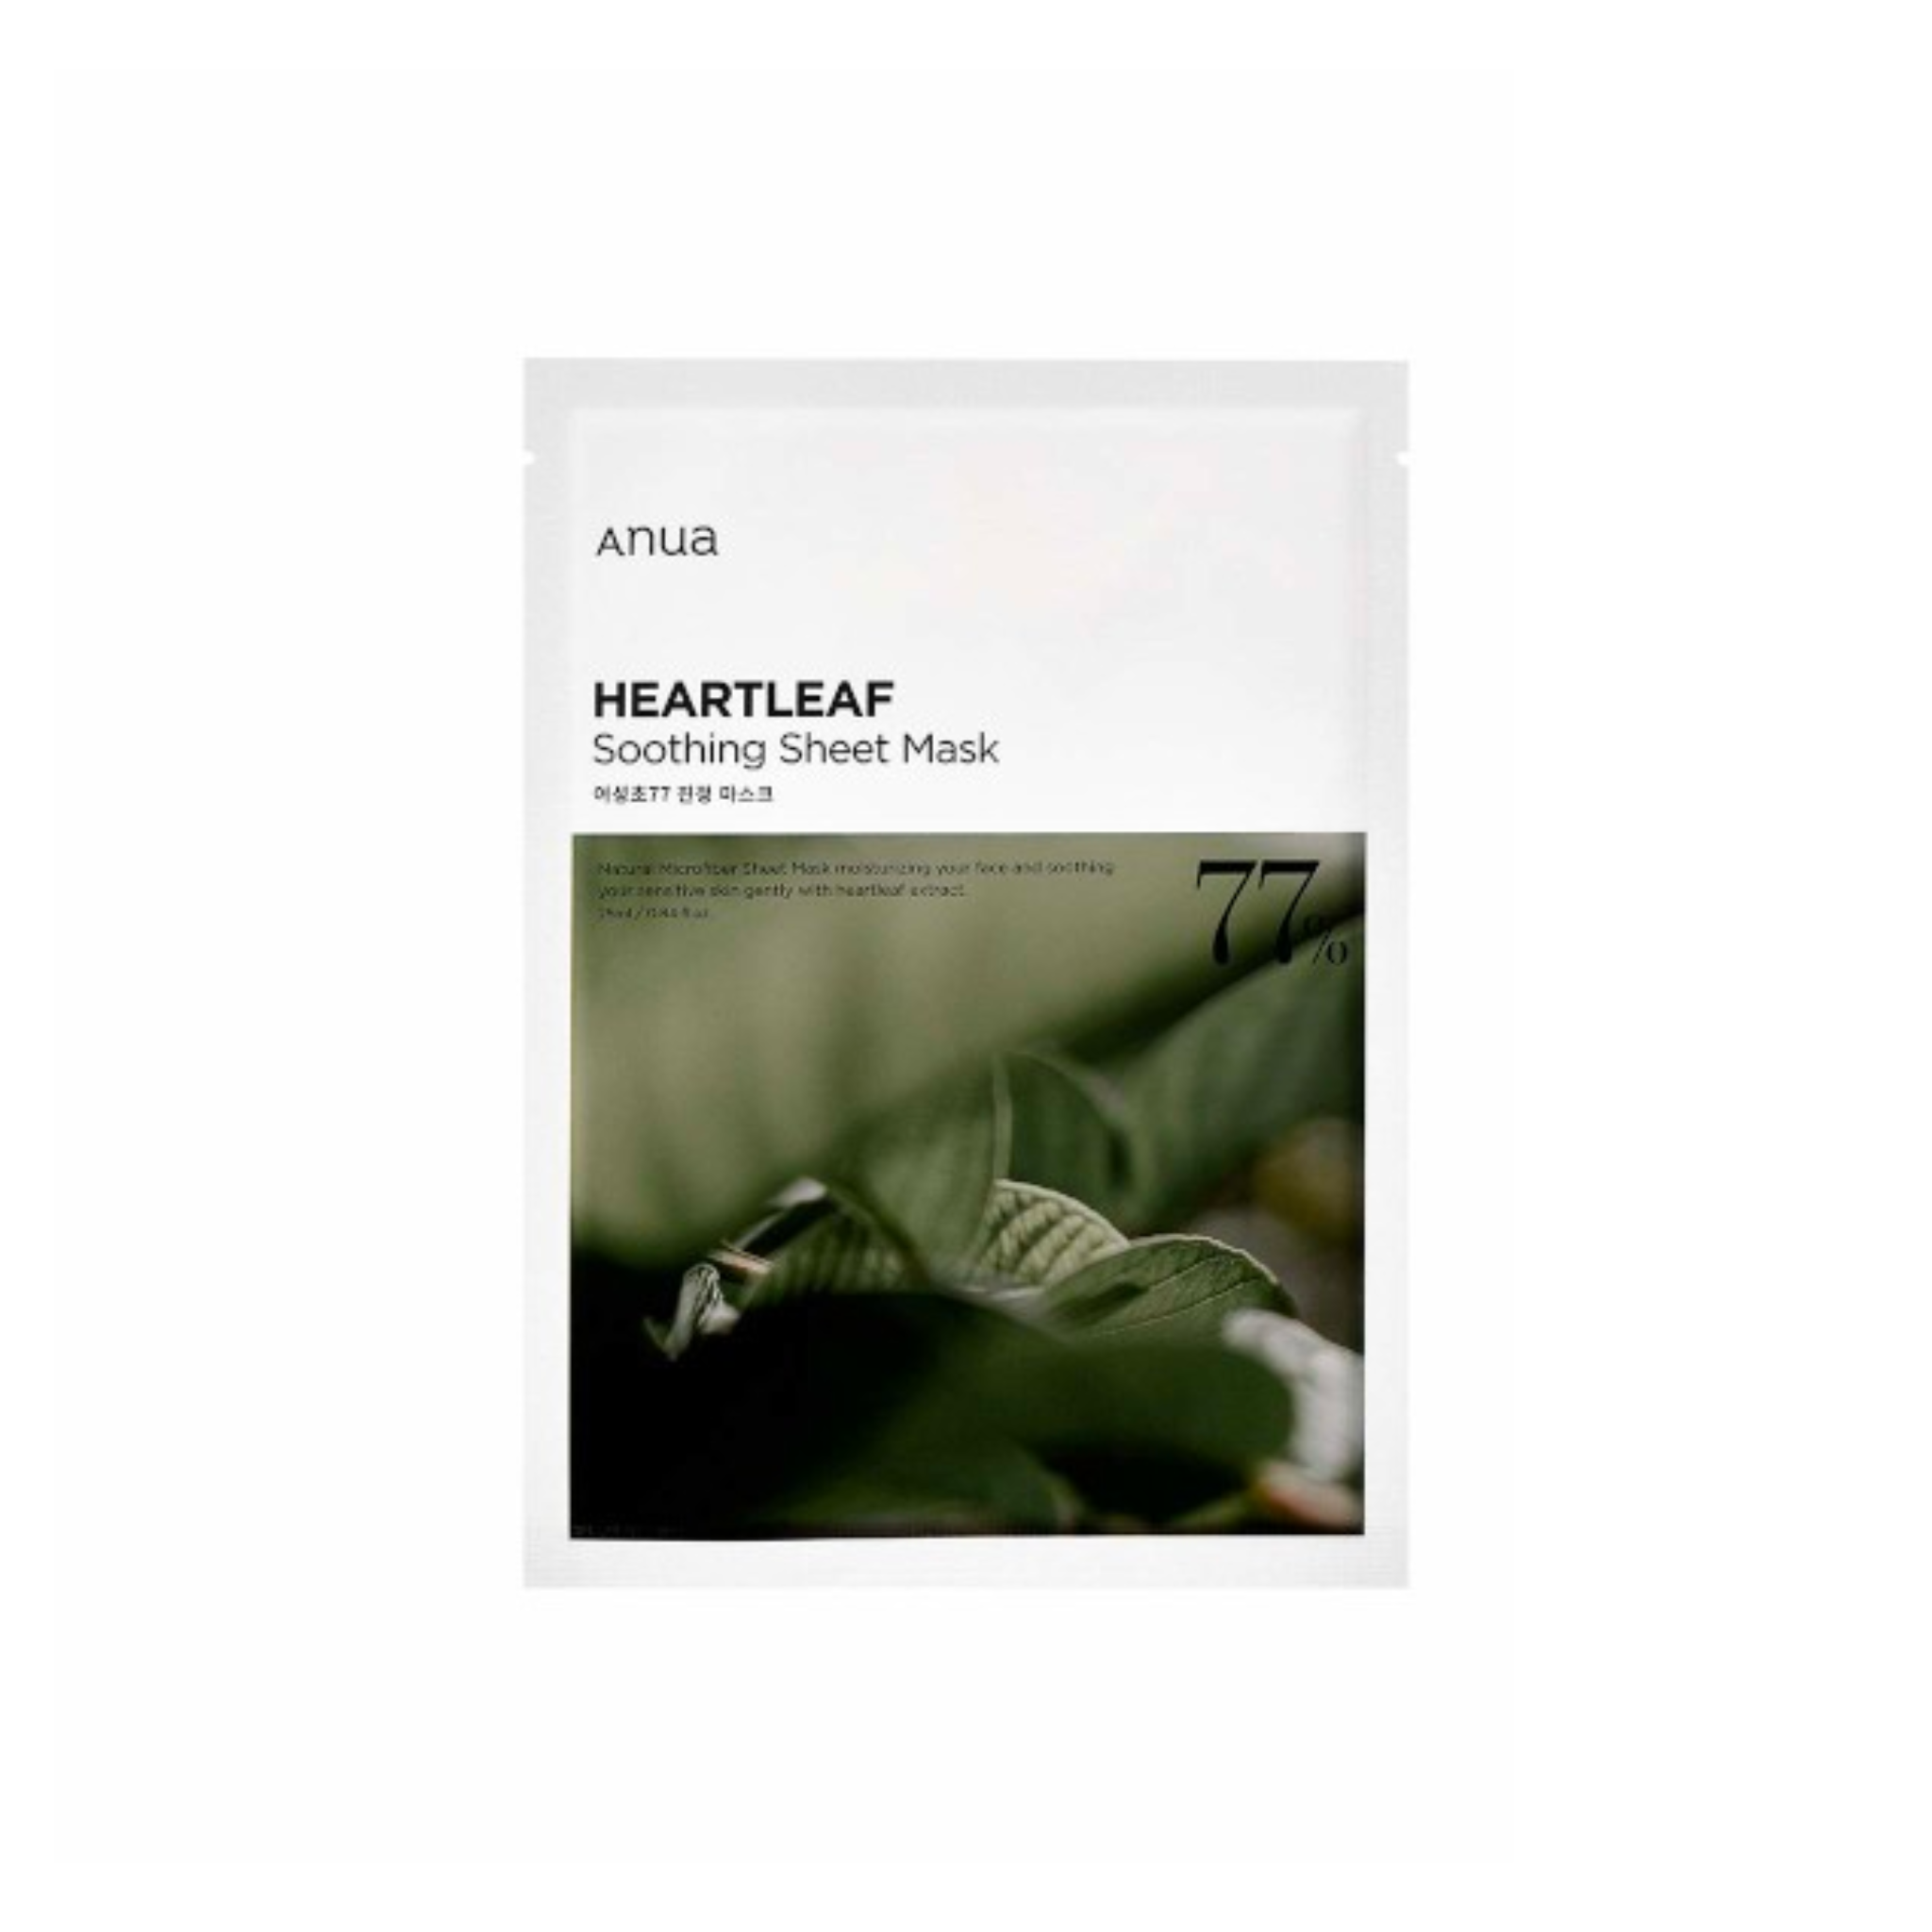 ANUA Heartleaf 77% Soothing Sheet Mask (1pcs)